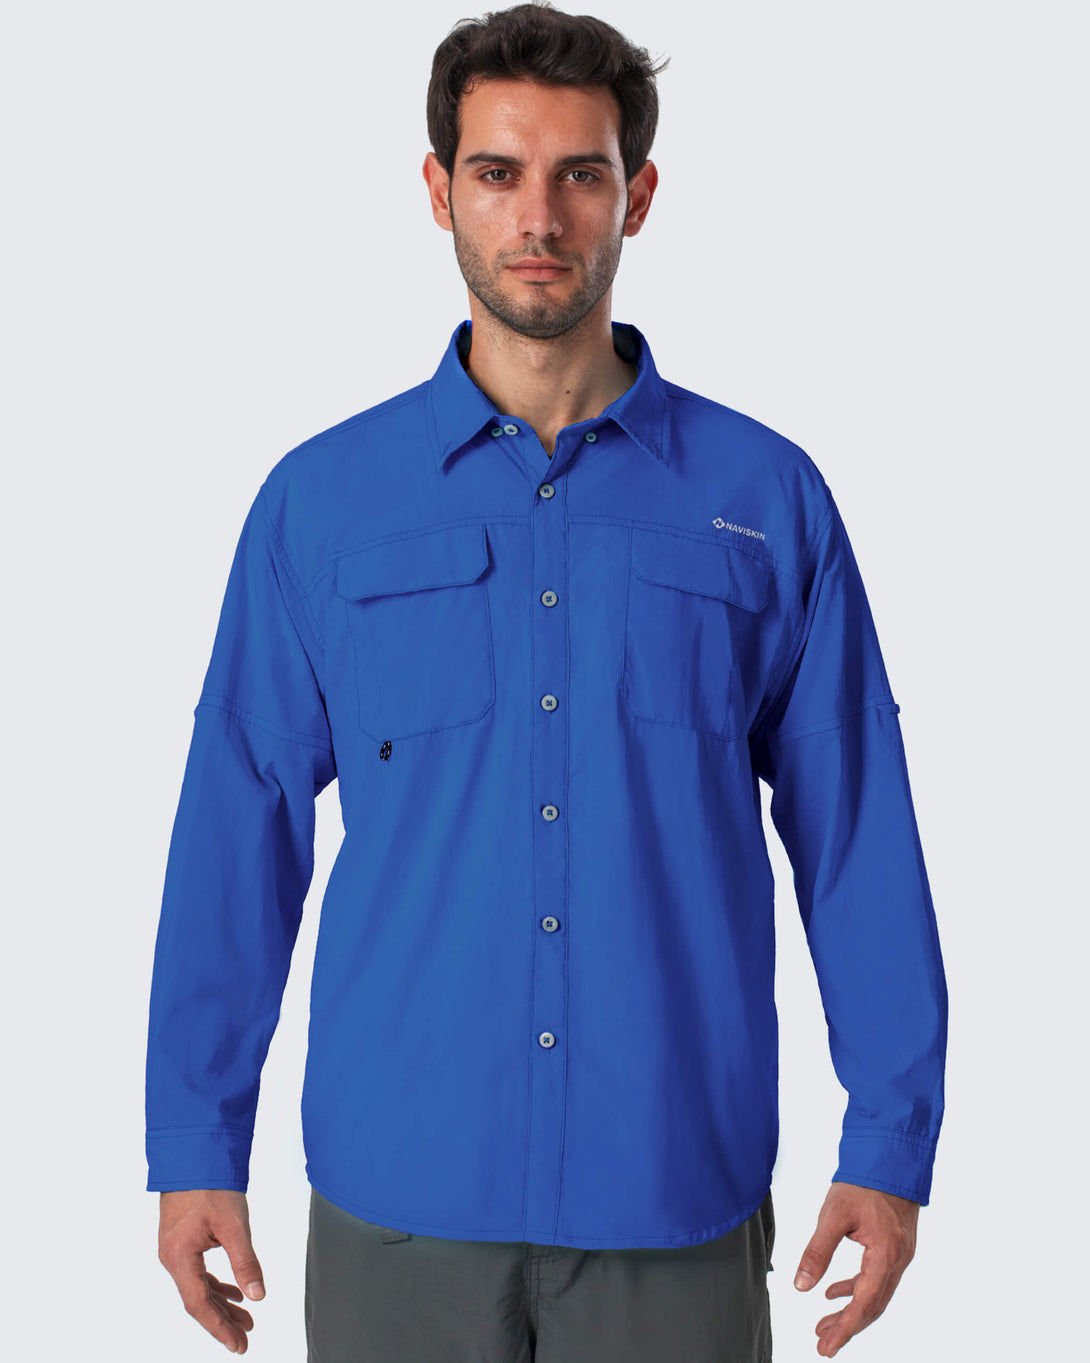 NAVISKIN Men's UPF 50+ Sun Protection Clothing Hiking Fishing Shirt Lightweight Quick Dry SPF Outdoor Long Sleeve Shirt, Vivid Blue / Large